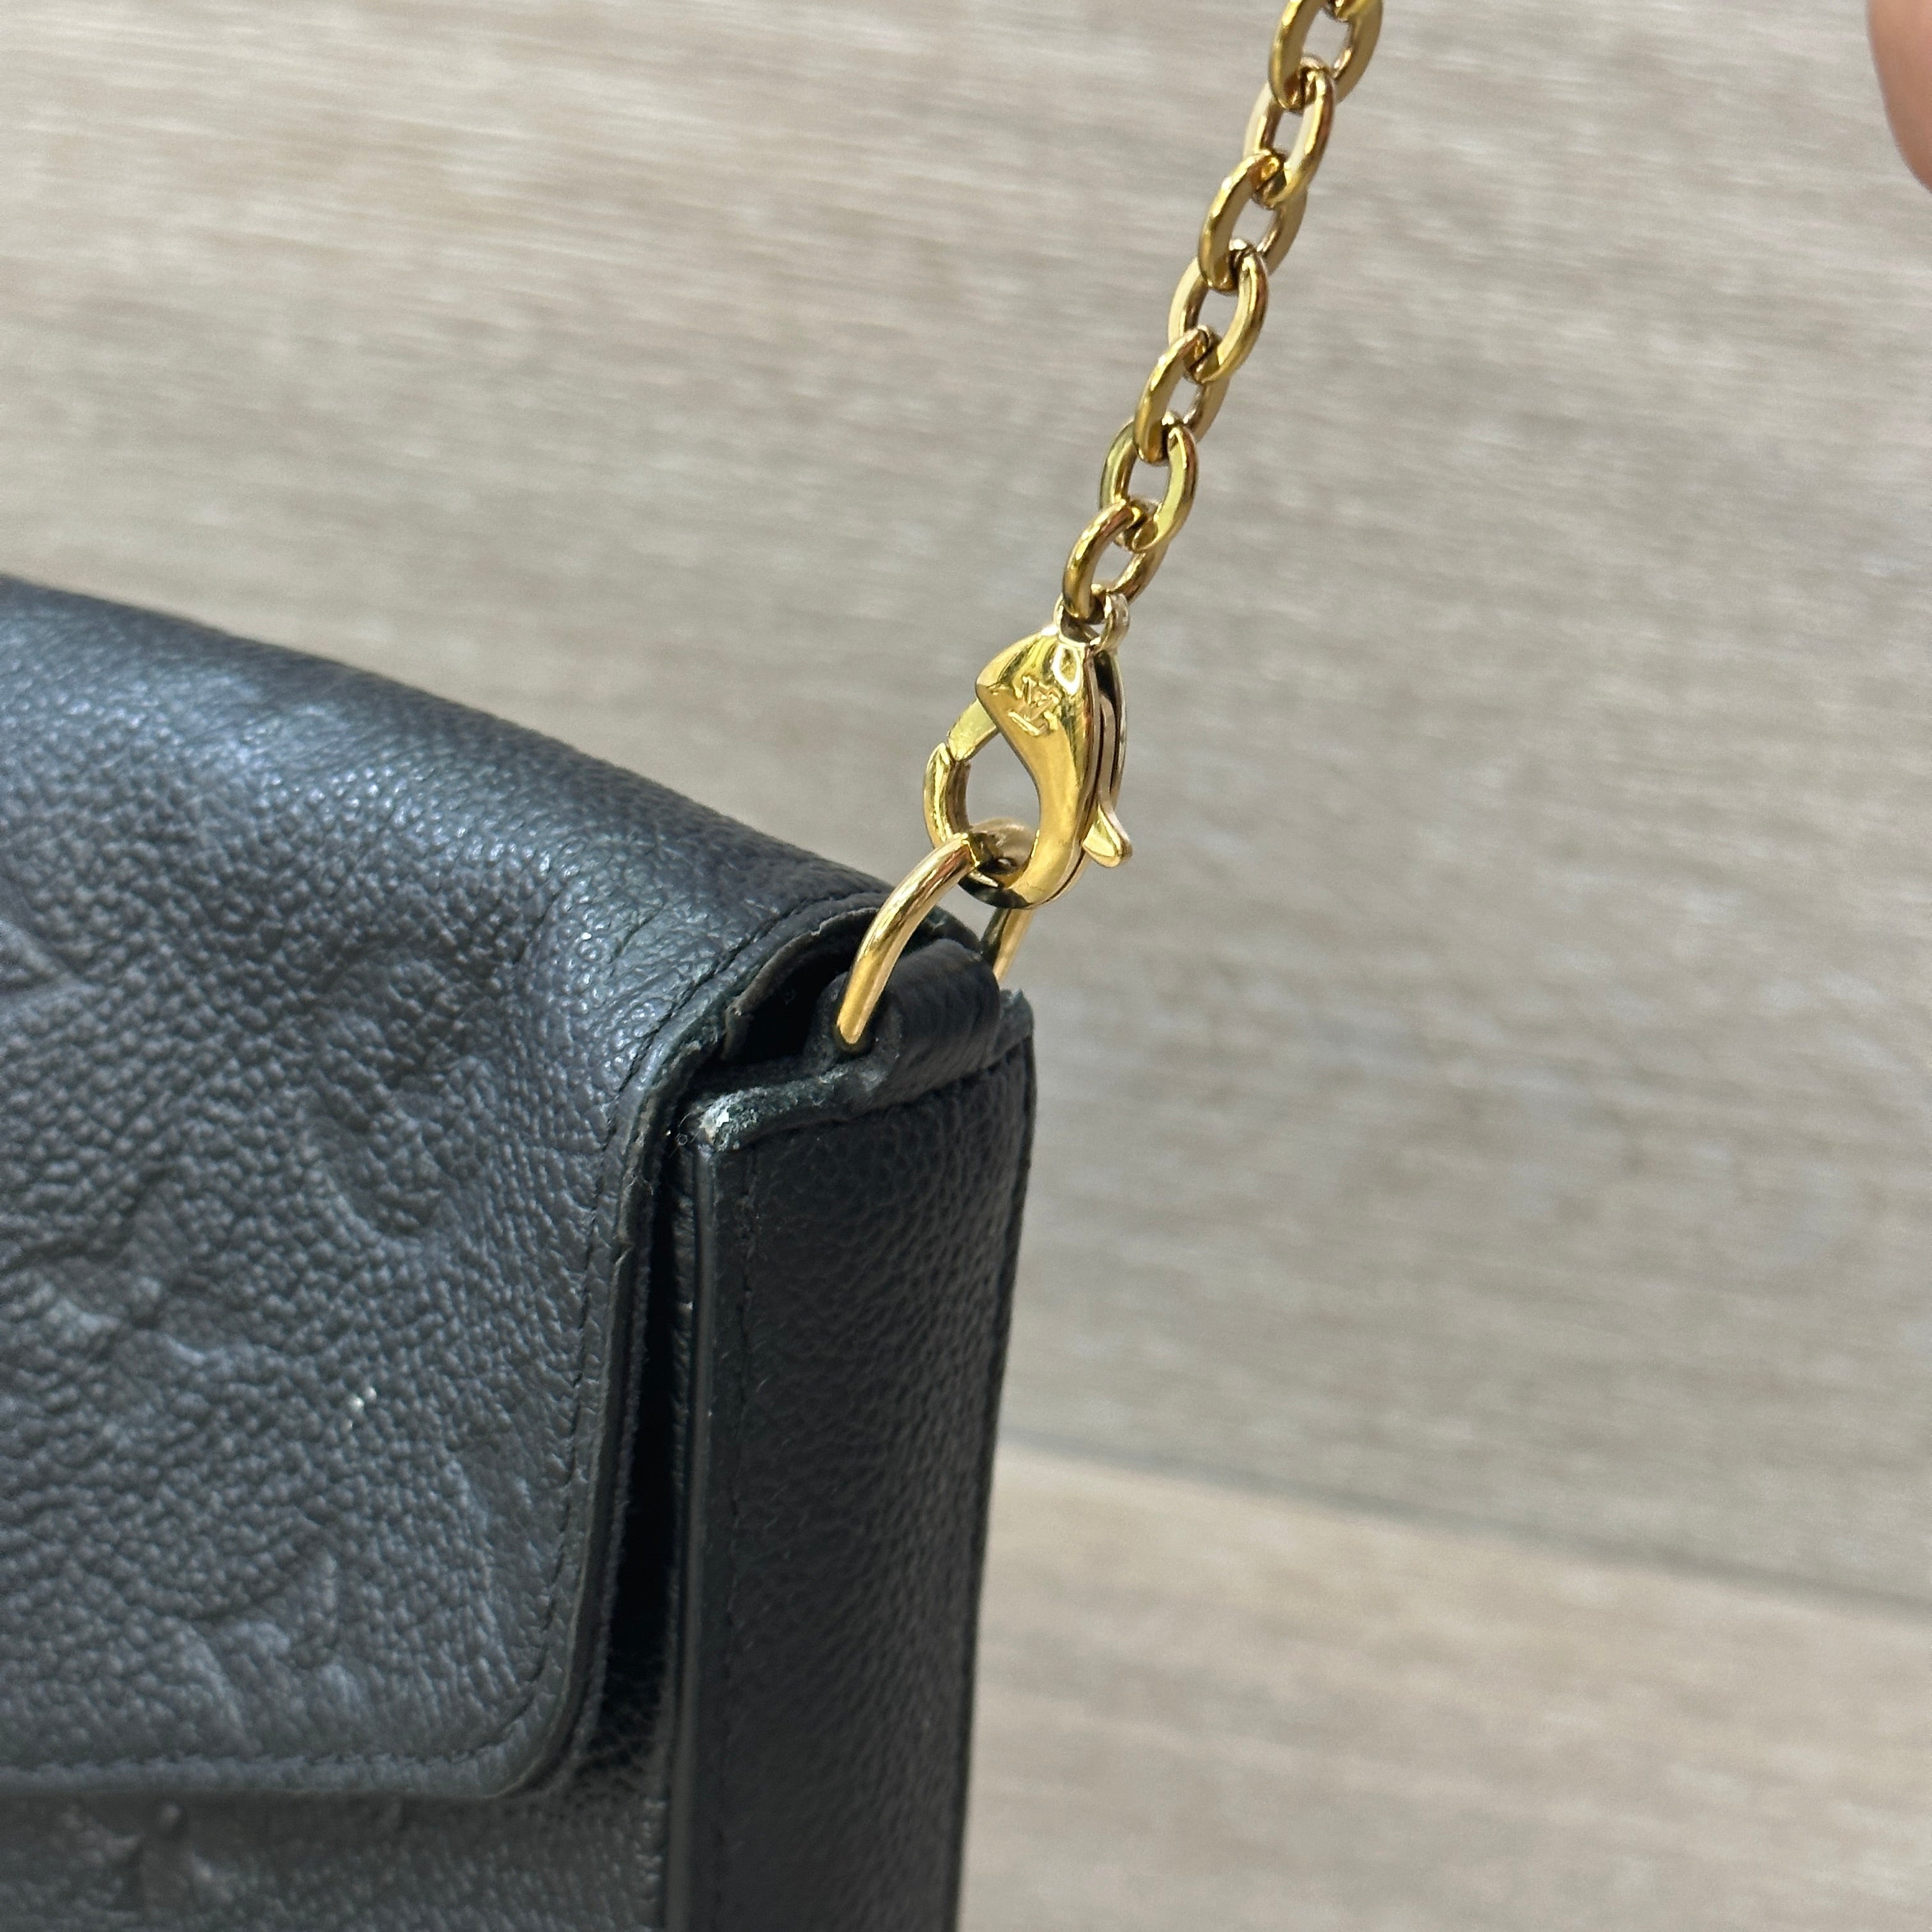 louis vuitton gold chain for purse